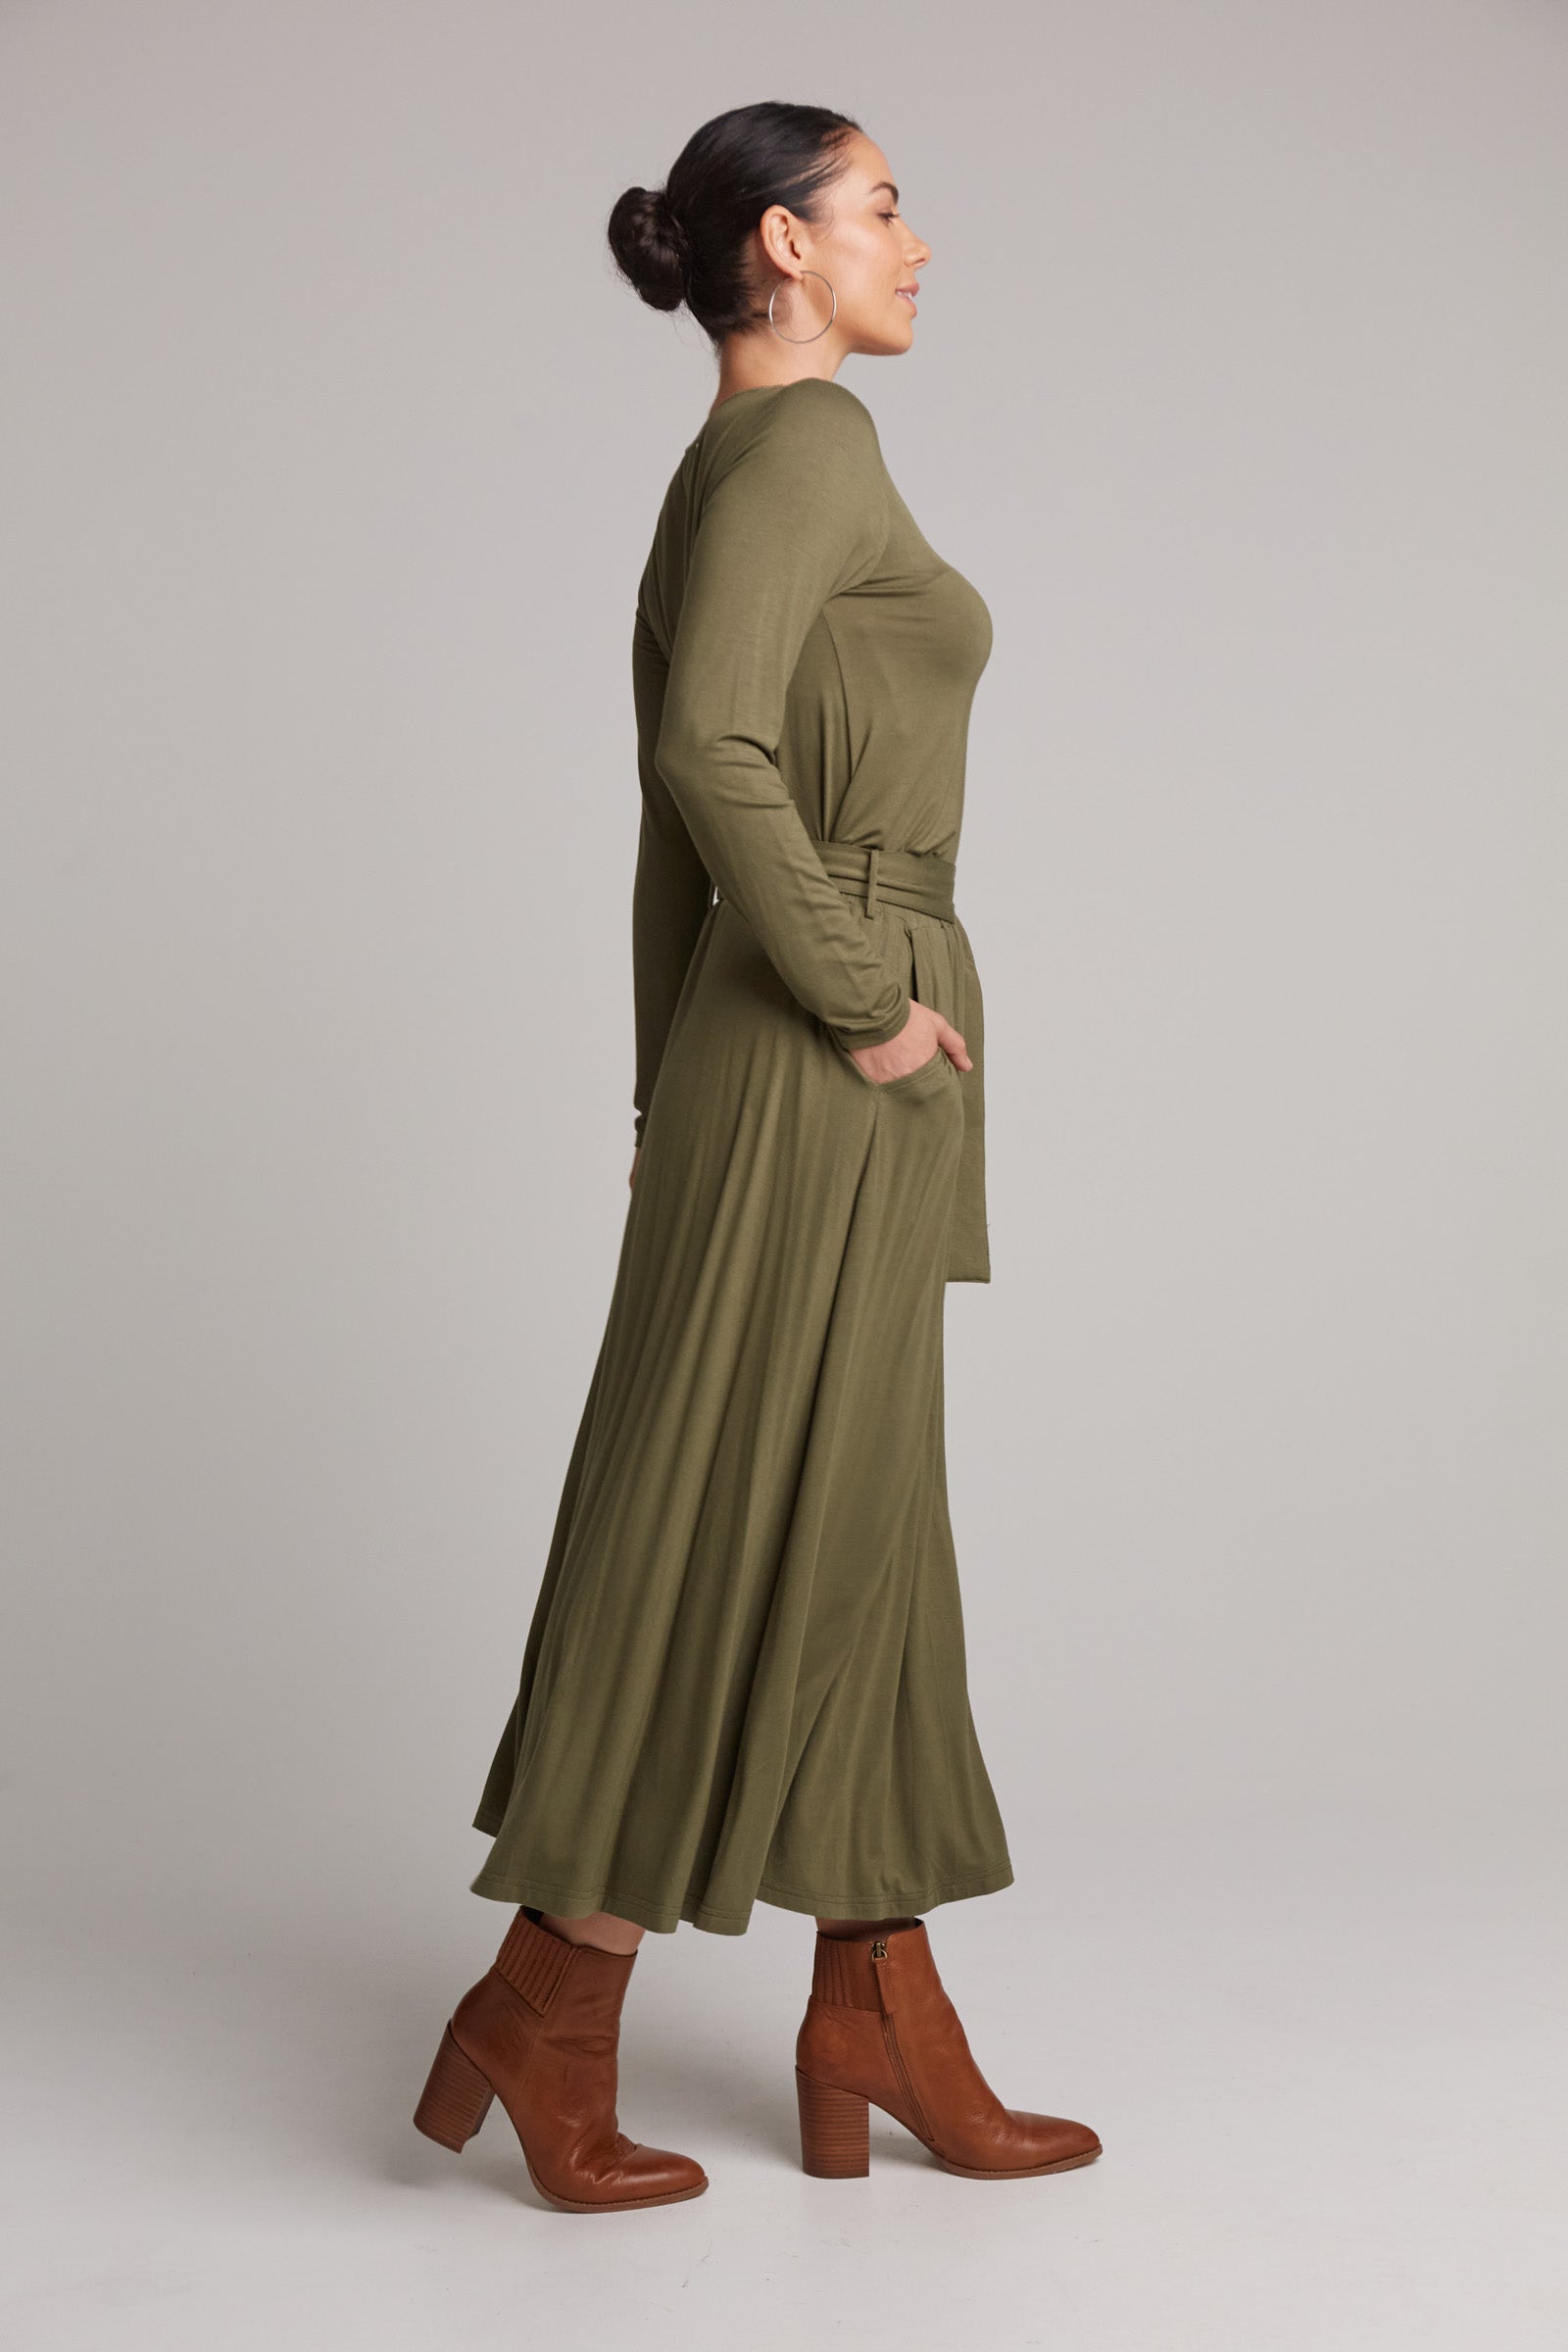 Studio Jersey Tie Skirt - Fern - eb&ive Clothing - Skirt Maxi